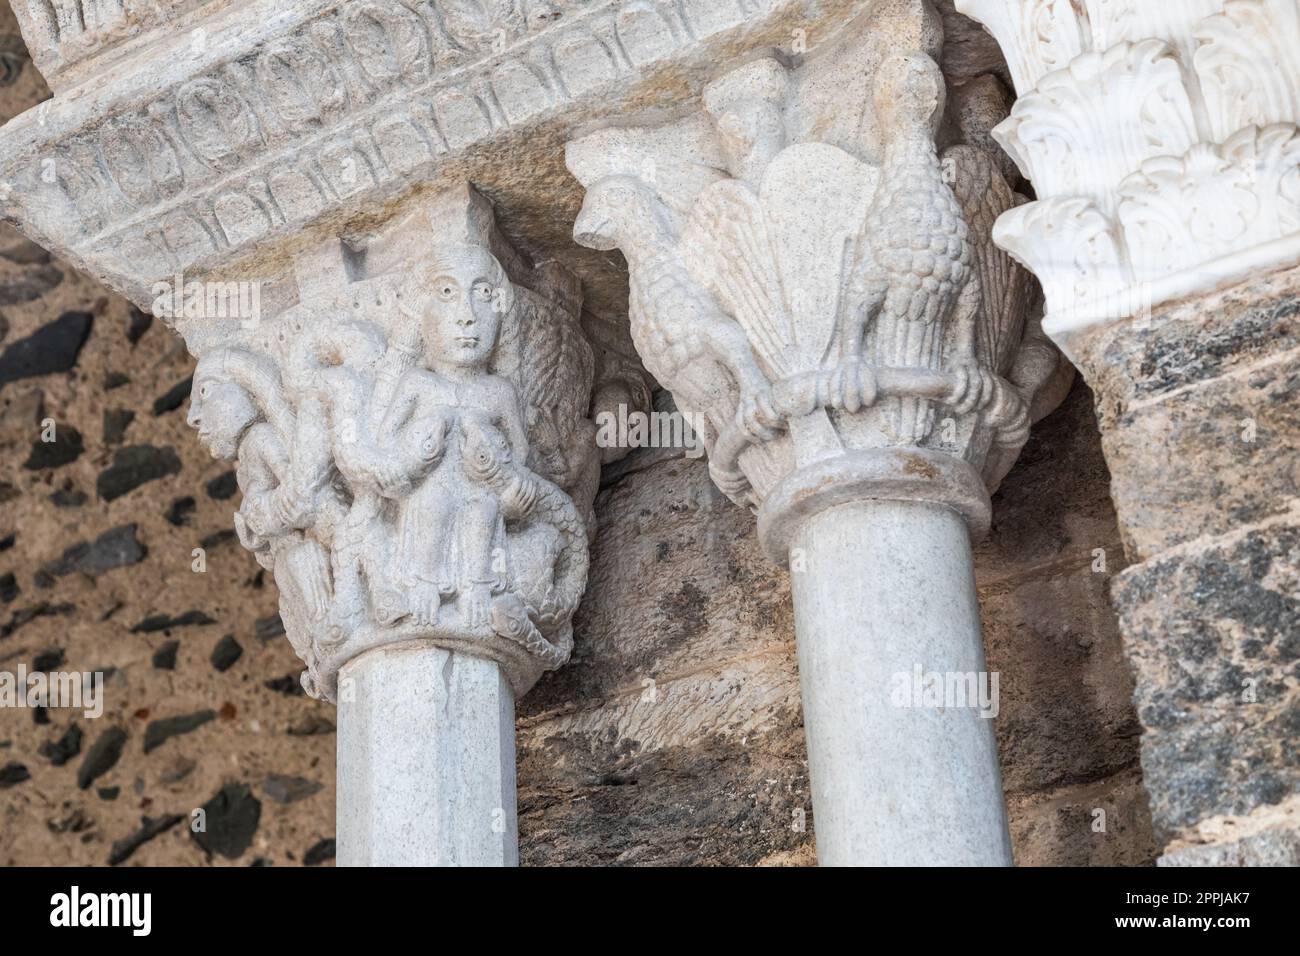 St Michael Abbey - Sacra di San Michele - Italy. Gargoyle monster sculpture, 11th Century. Stock Photo